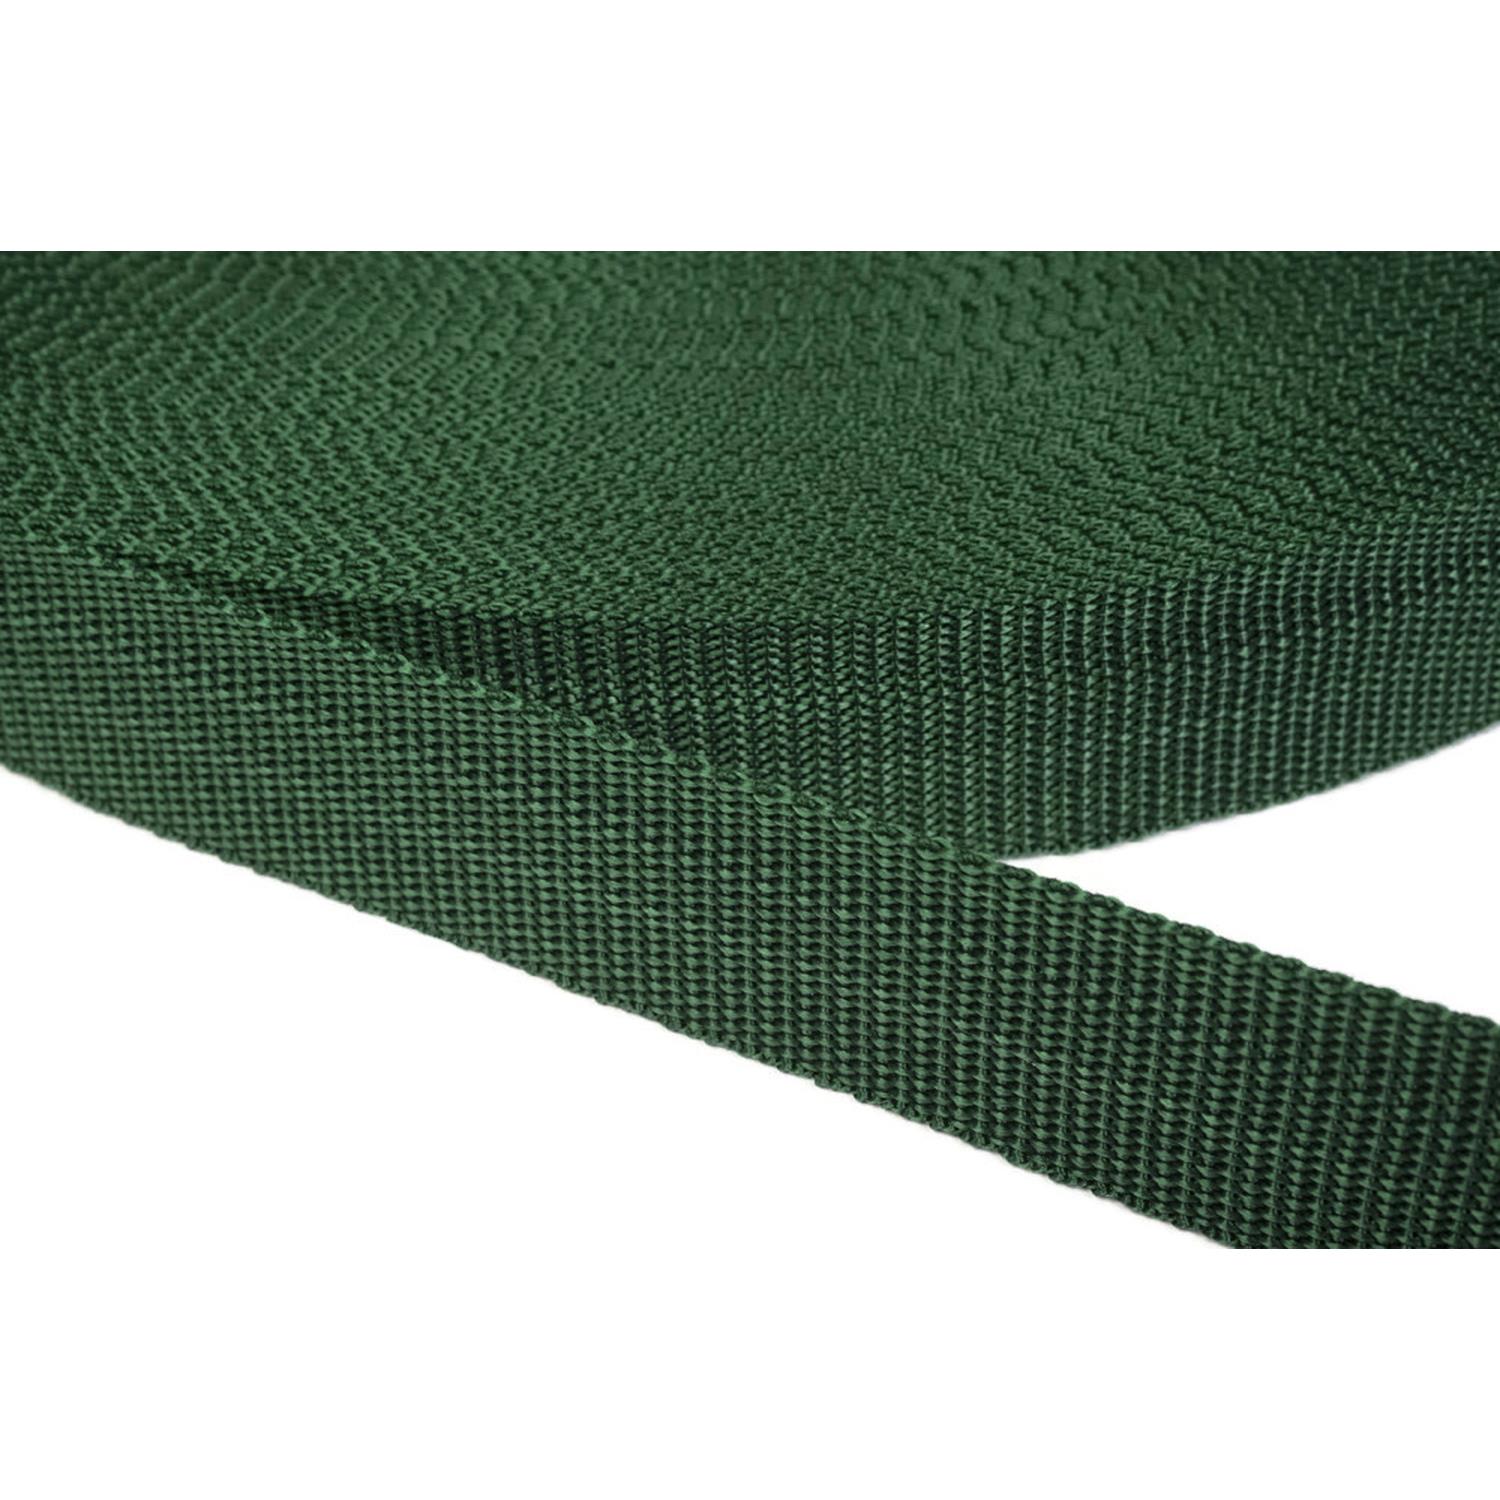 Gurtband 25mm breit aus Polypropylen in 41 Farben 35 - dunkelgrün 12 Meter